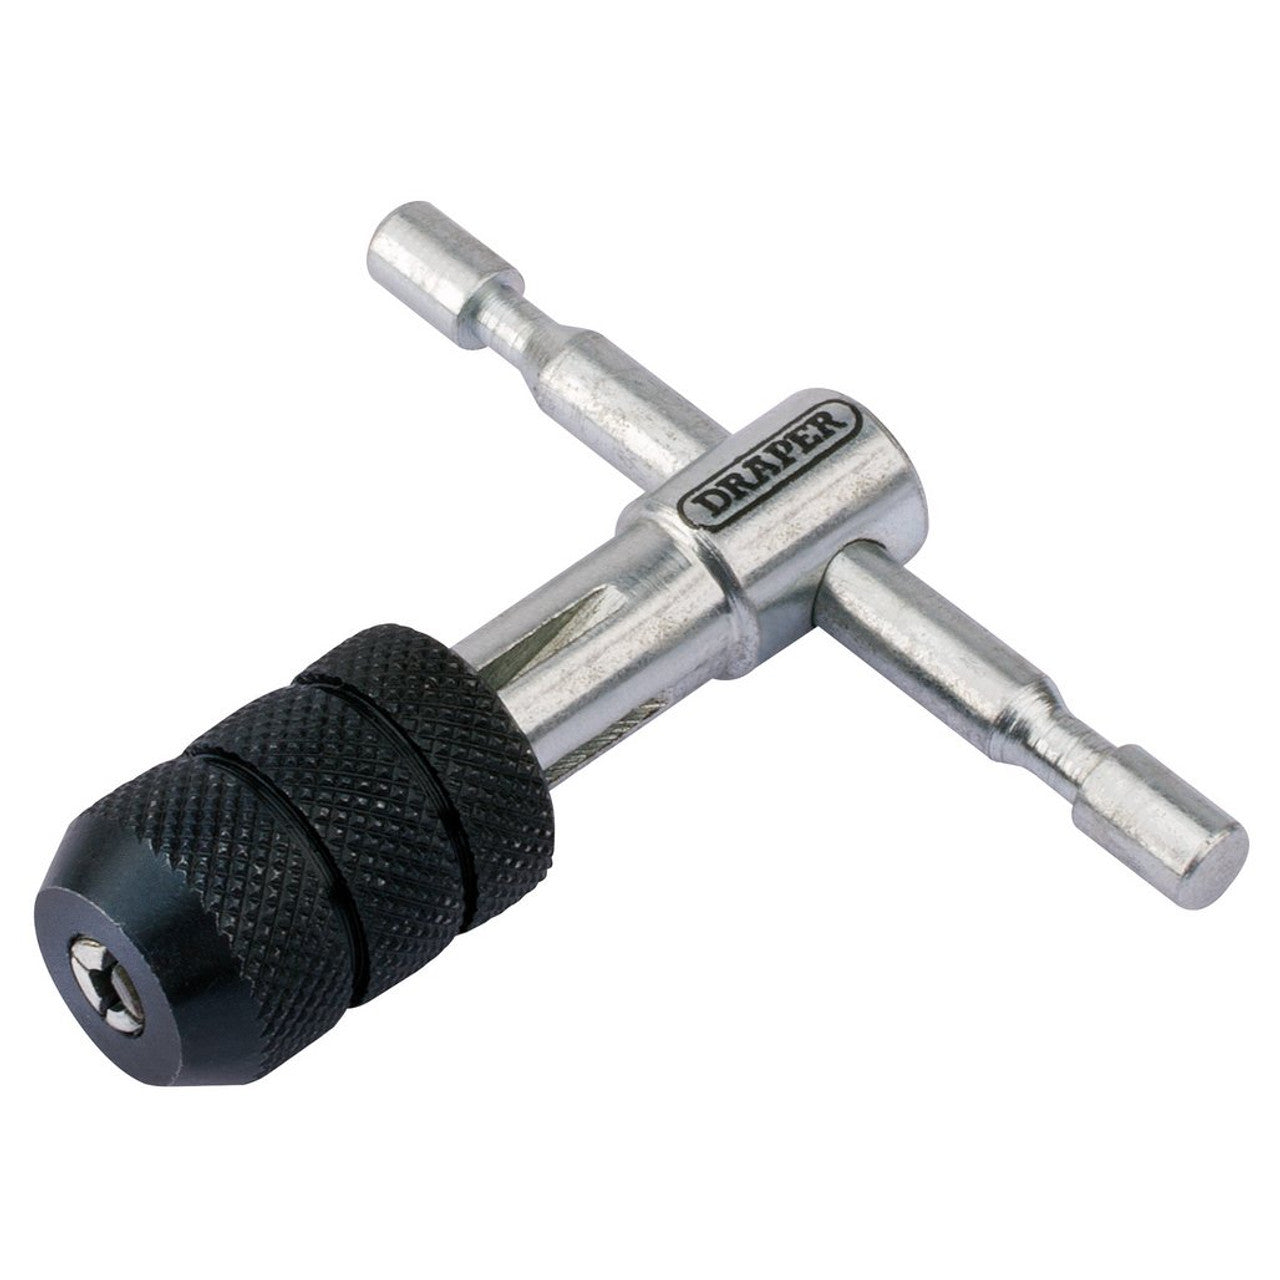 Draper 45713 T Type Tap Wrench, 2.0 - 4.0mm Capacity